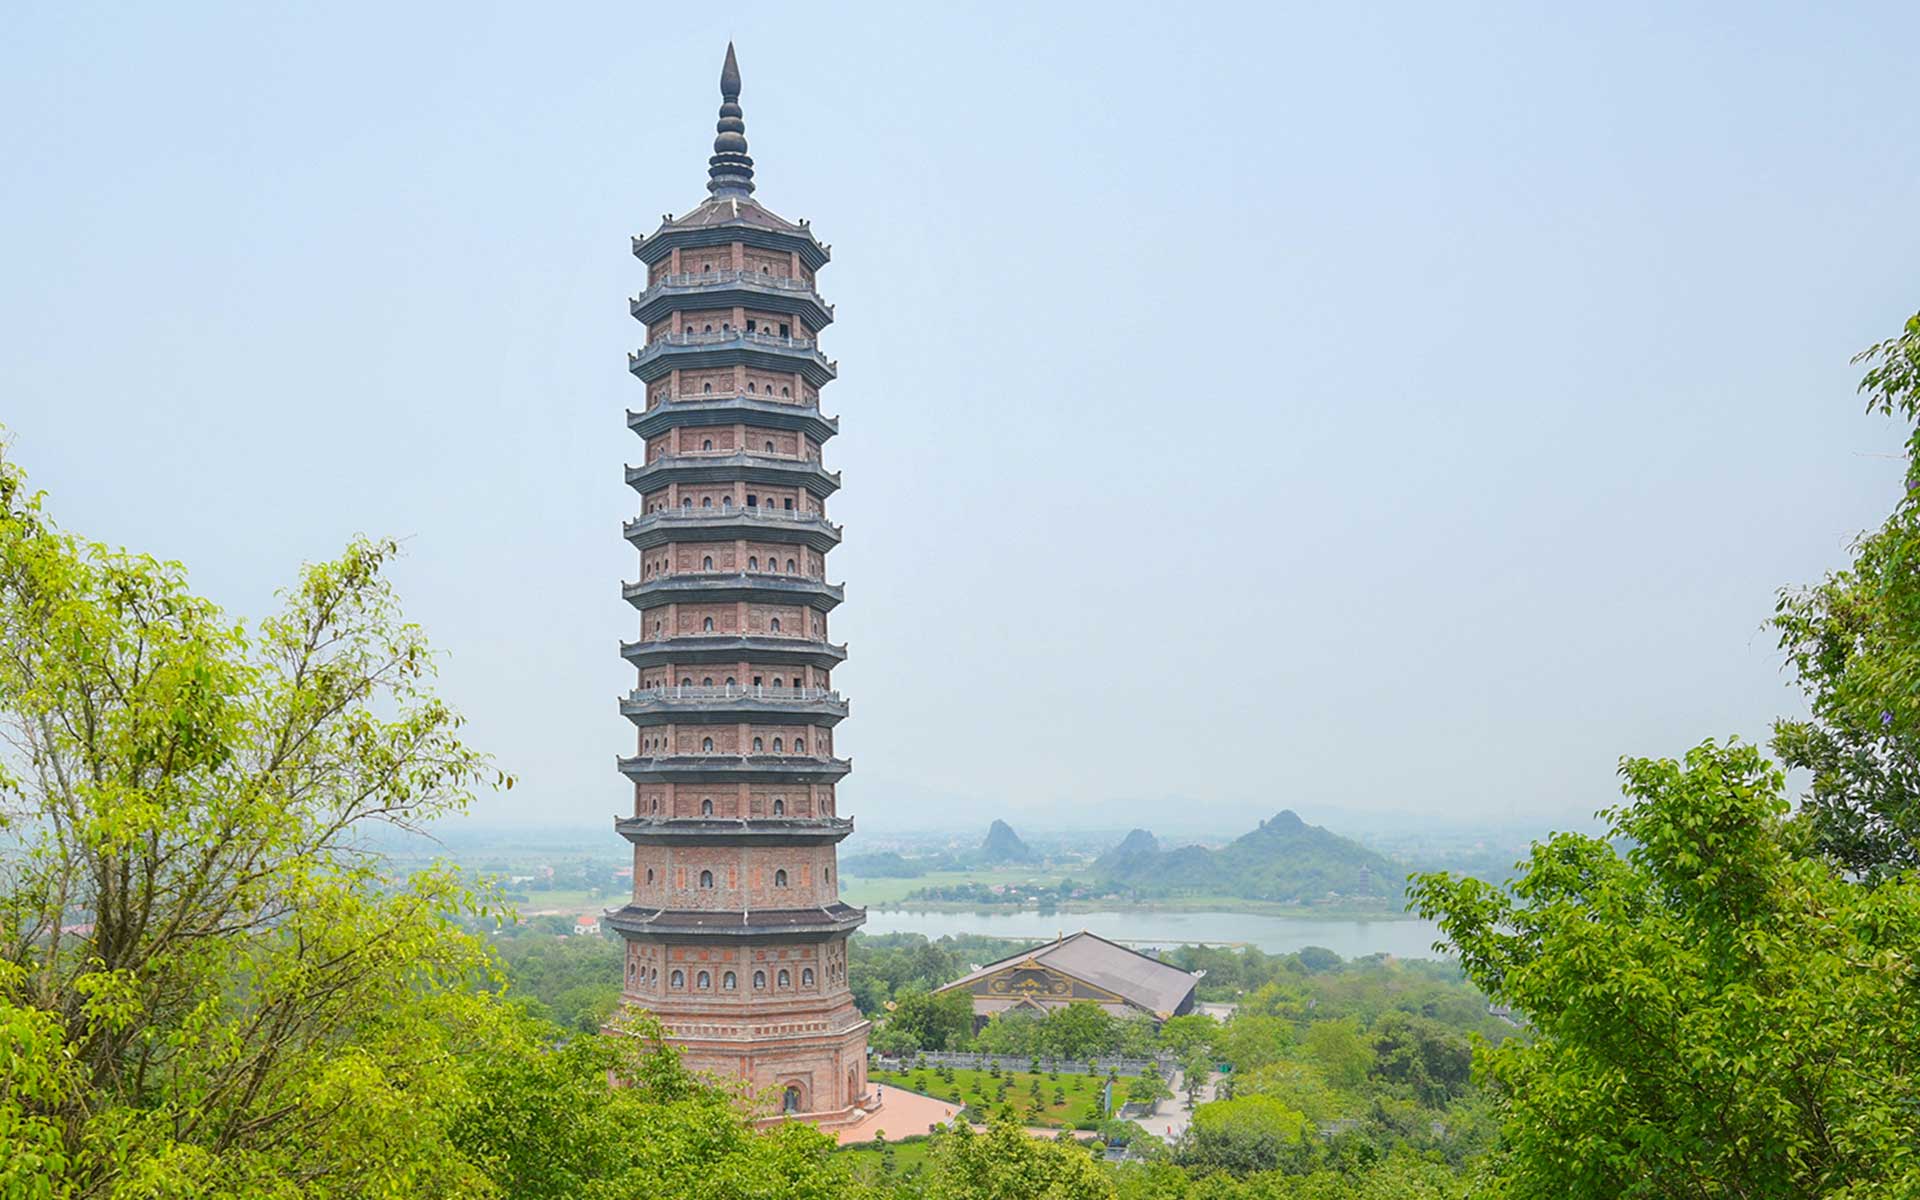 Bao Thap Tower